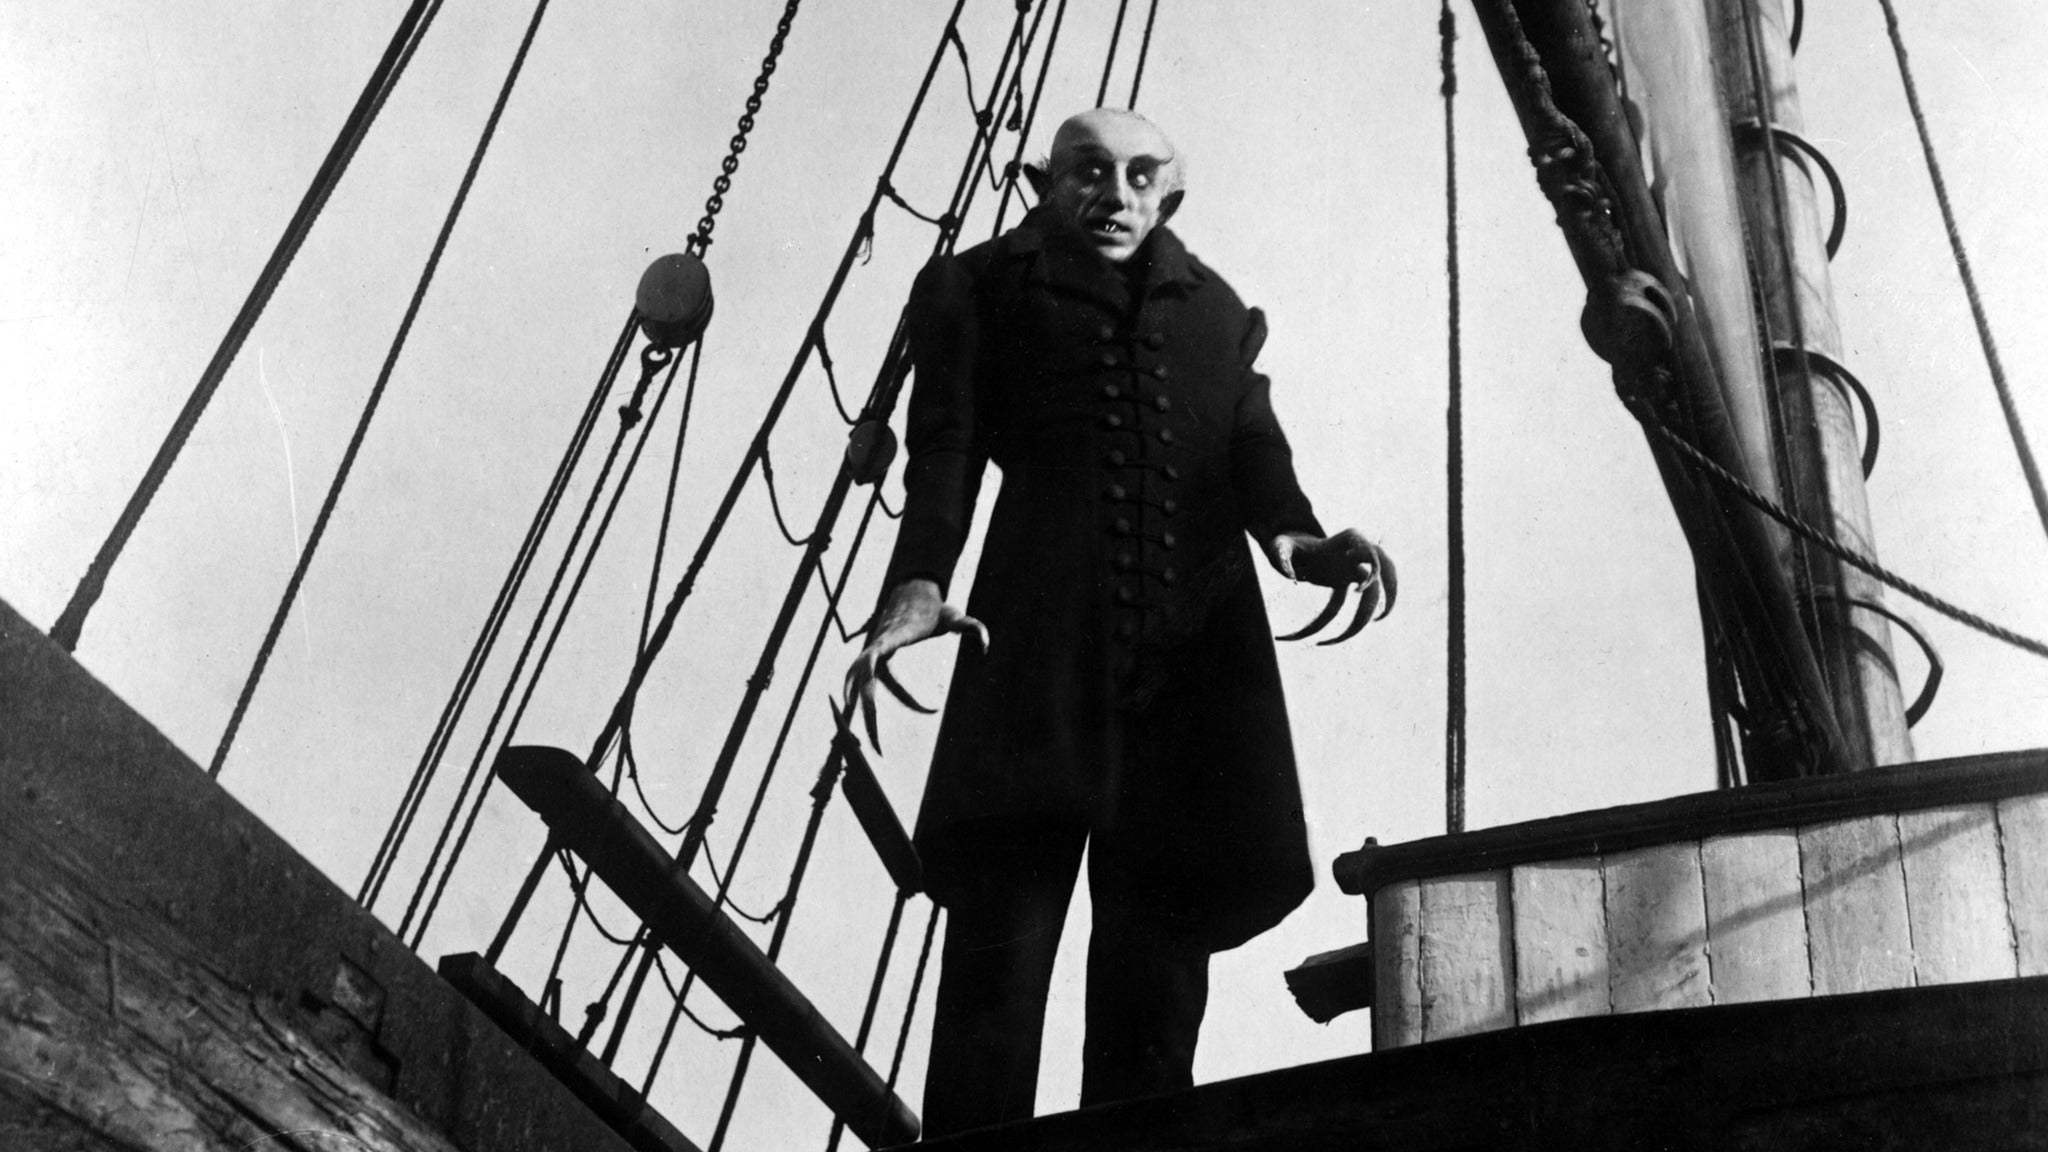 Halloween Movie Night: Nosferatu, Silent Film with Organ in Nashville promo photo for Ticketmaster presale offer code